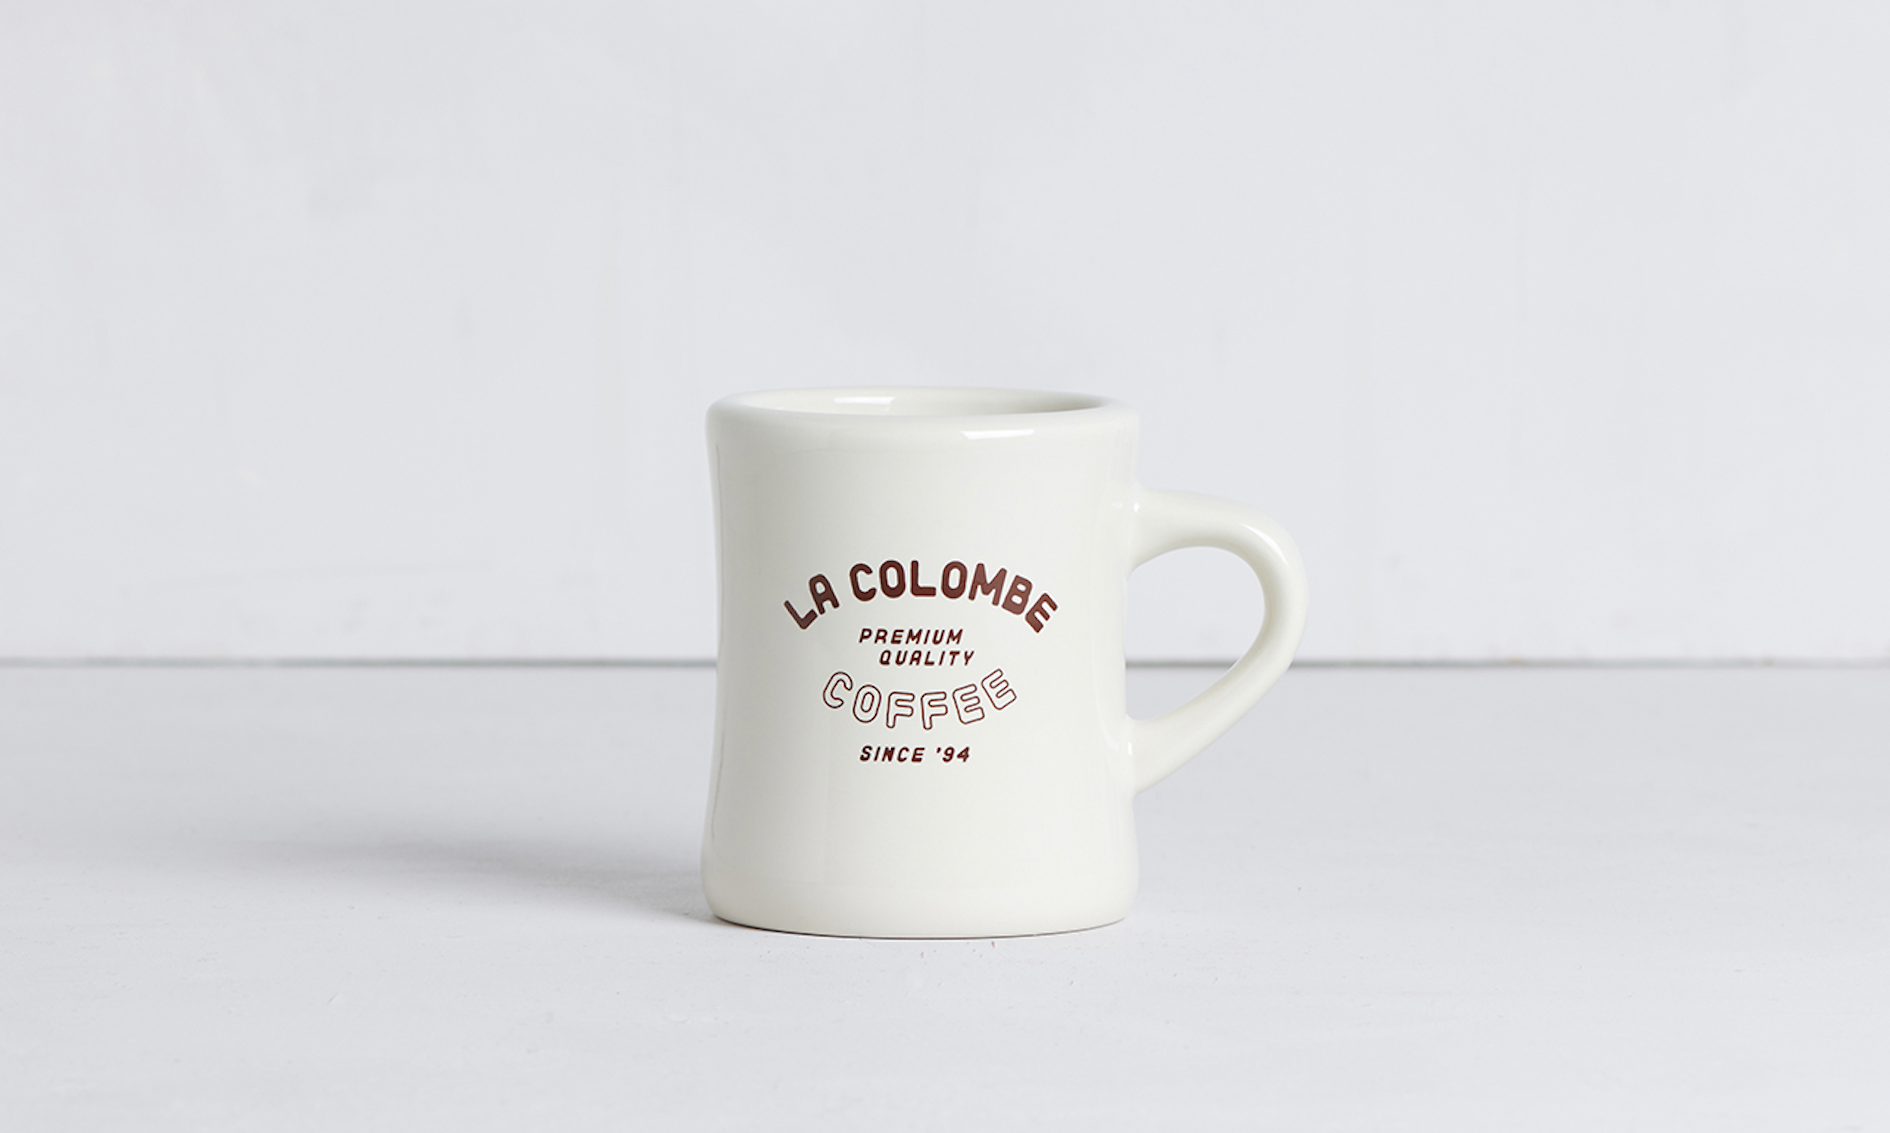 Vintage Bodum espresso cups